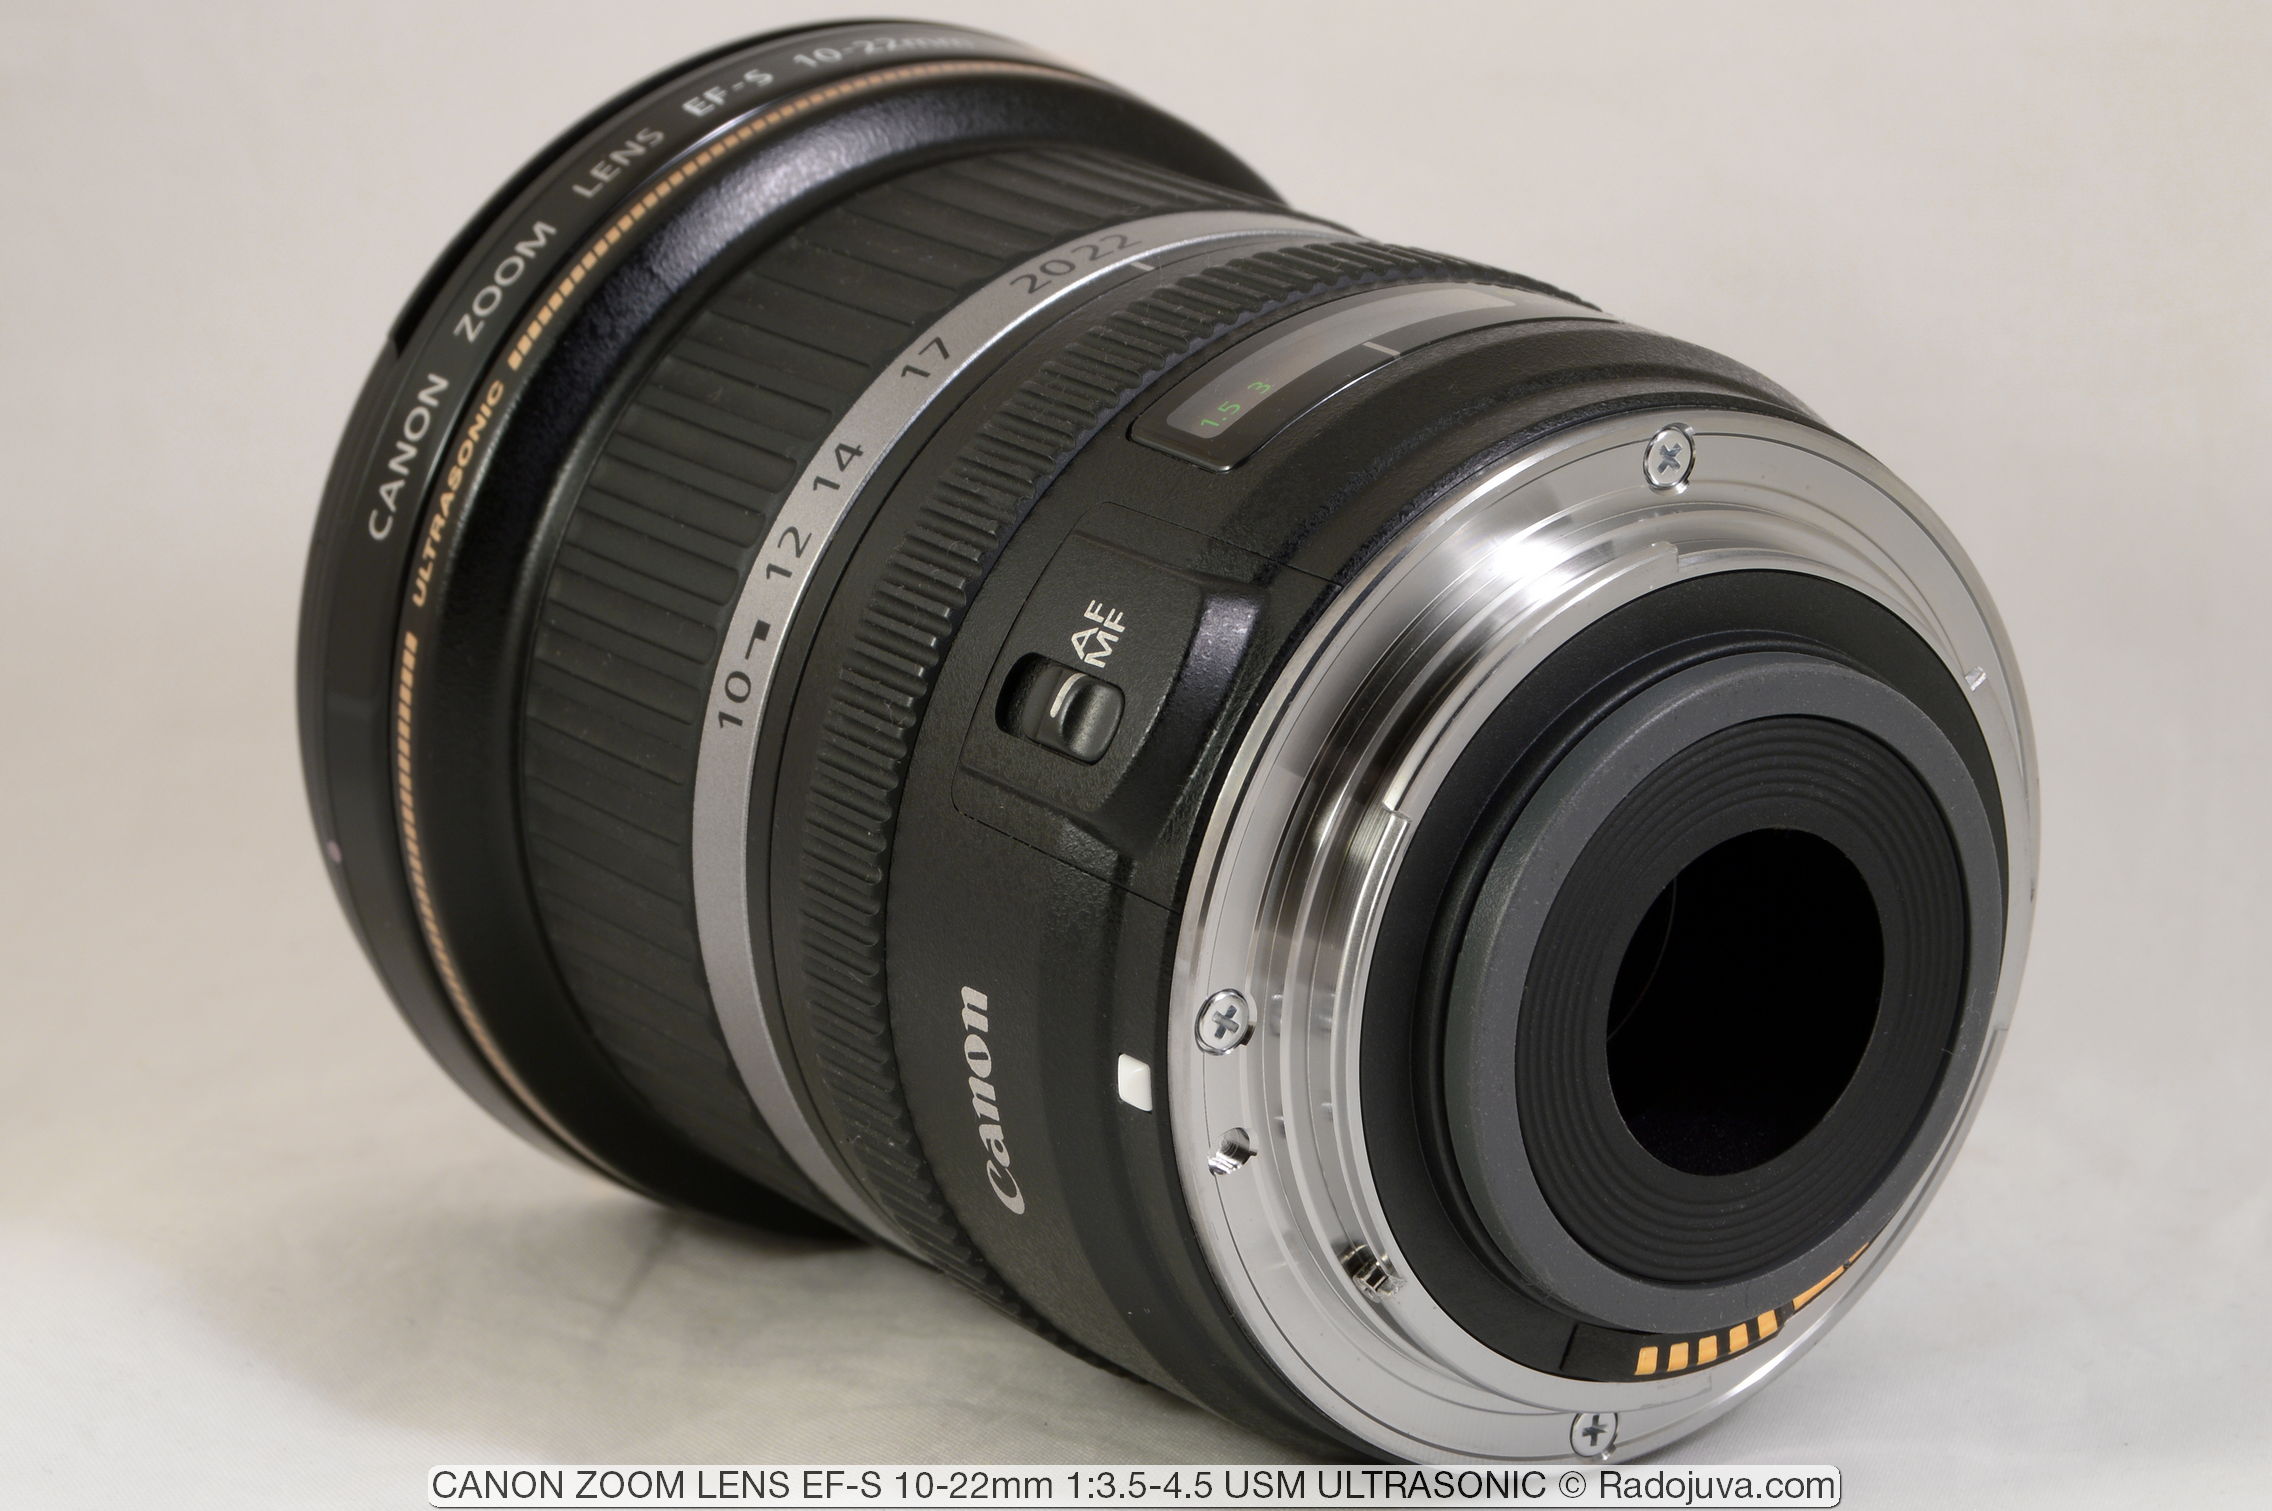 Reseña Canon Zoom Lens EF-S 10-22mm 1:3.5-4.5 USM ULTRASONIC | Contento